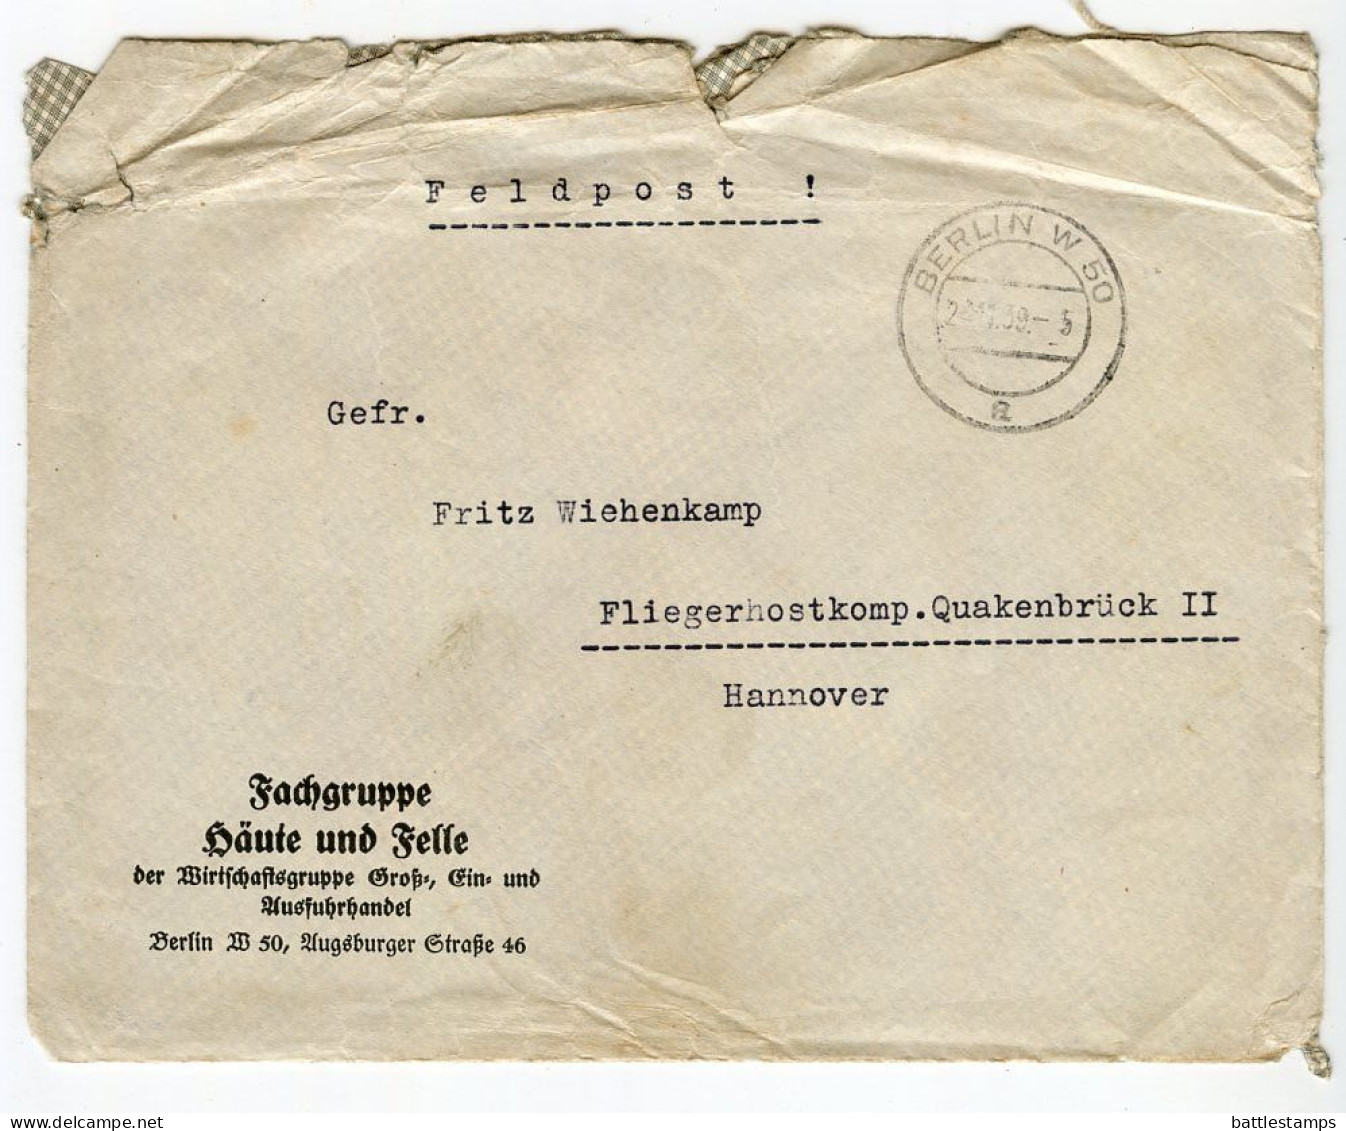 Germany 1939 WWII Feldpost Cover; Berlin To Fliergerhostkomp. Quakenbrück II, Hannover - Fritz Wiehenkamp - Feldpost 2. Weltkrieg